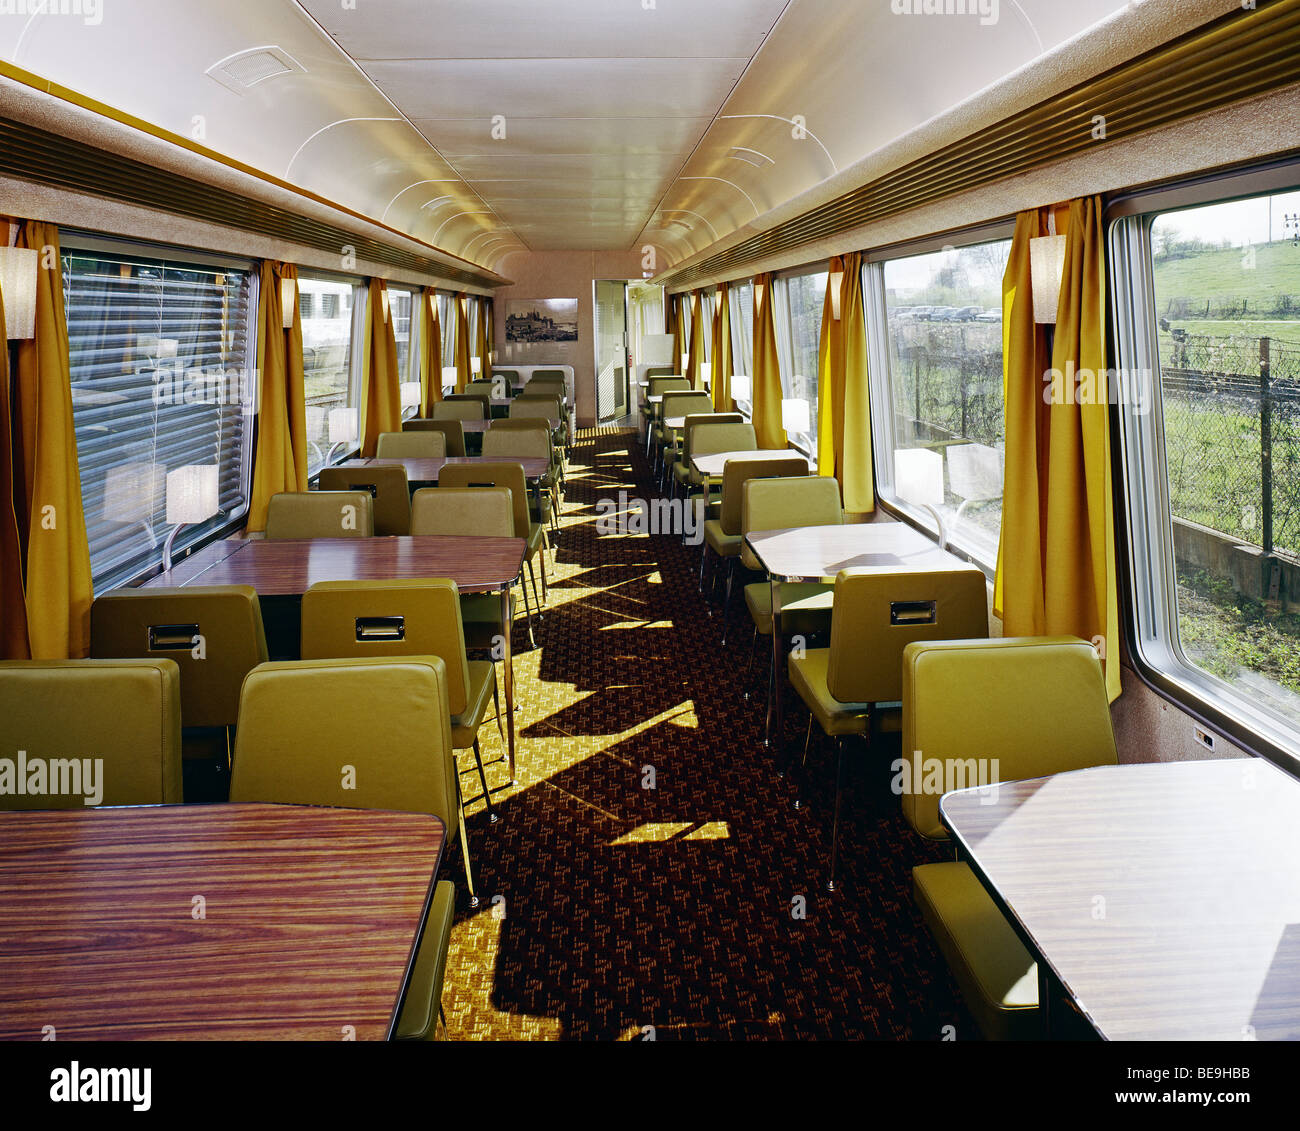 Railway carriage cafeteria Stock Photo